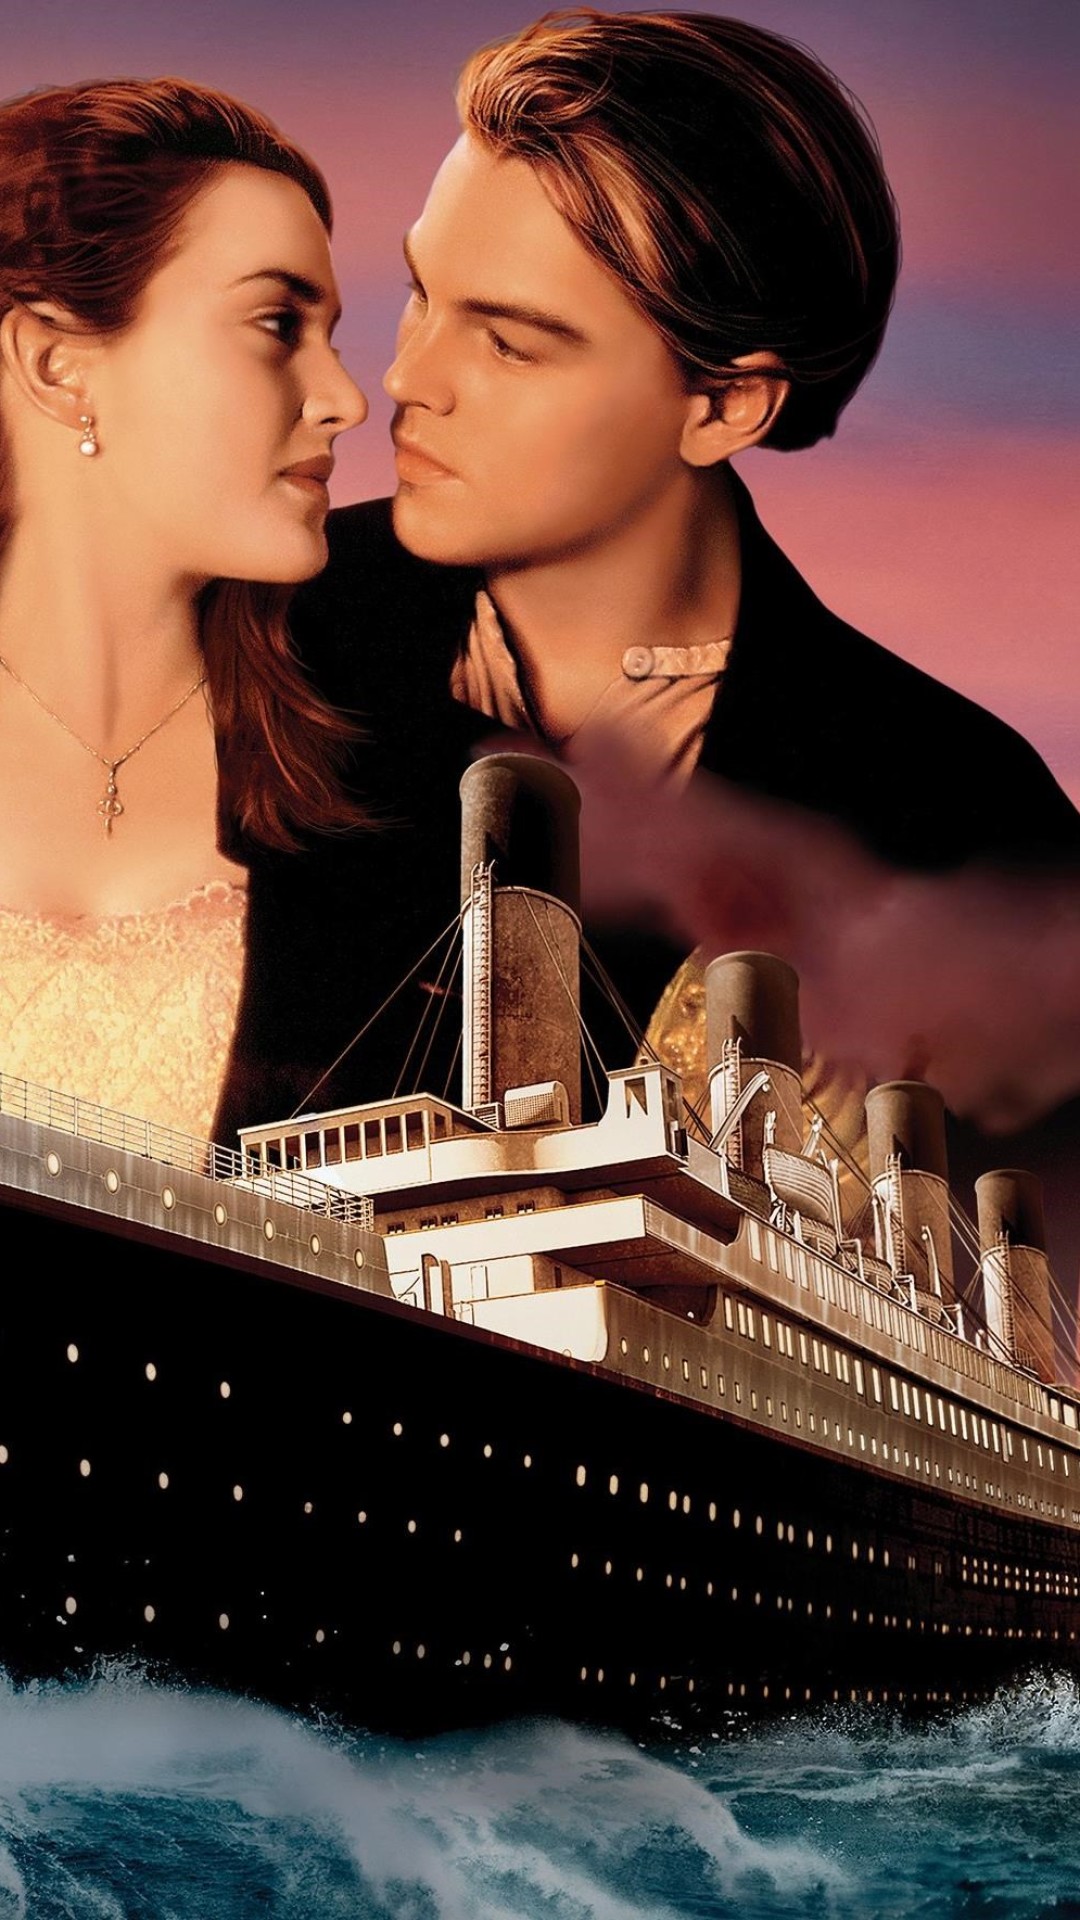 titanic hd wallpaper,film,poster,liebe,romantik,fotografie